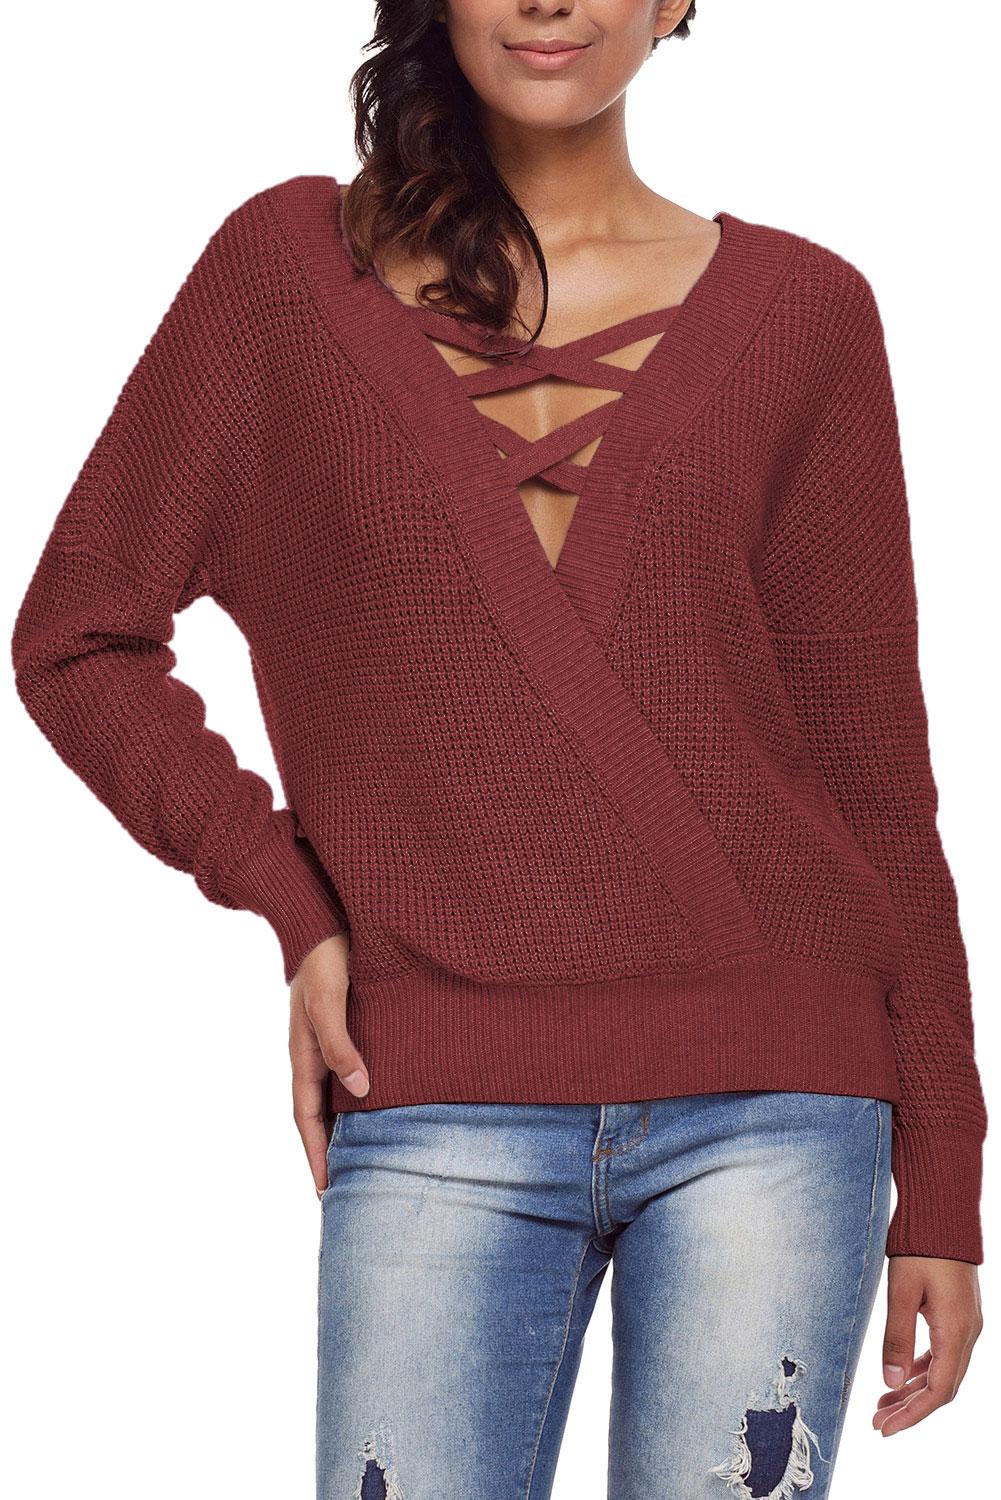 Strawberry Fields Cross Back 100% Cotton Womens Sweater